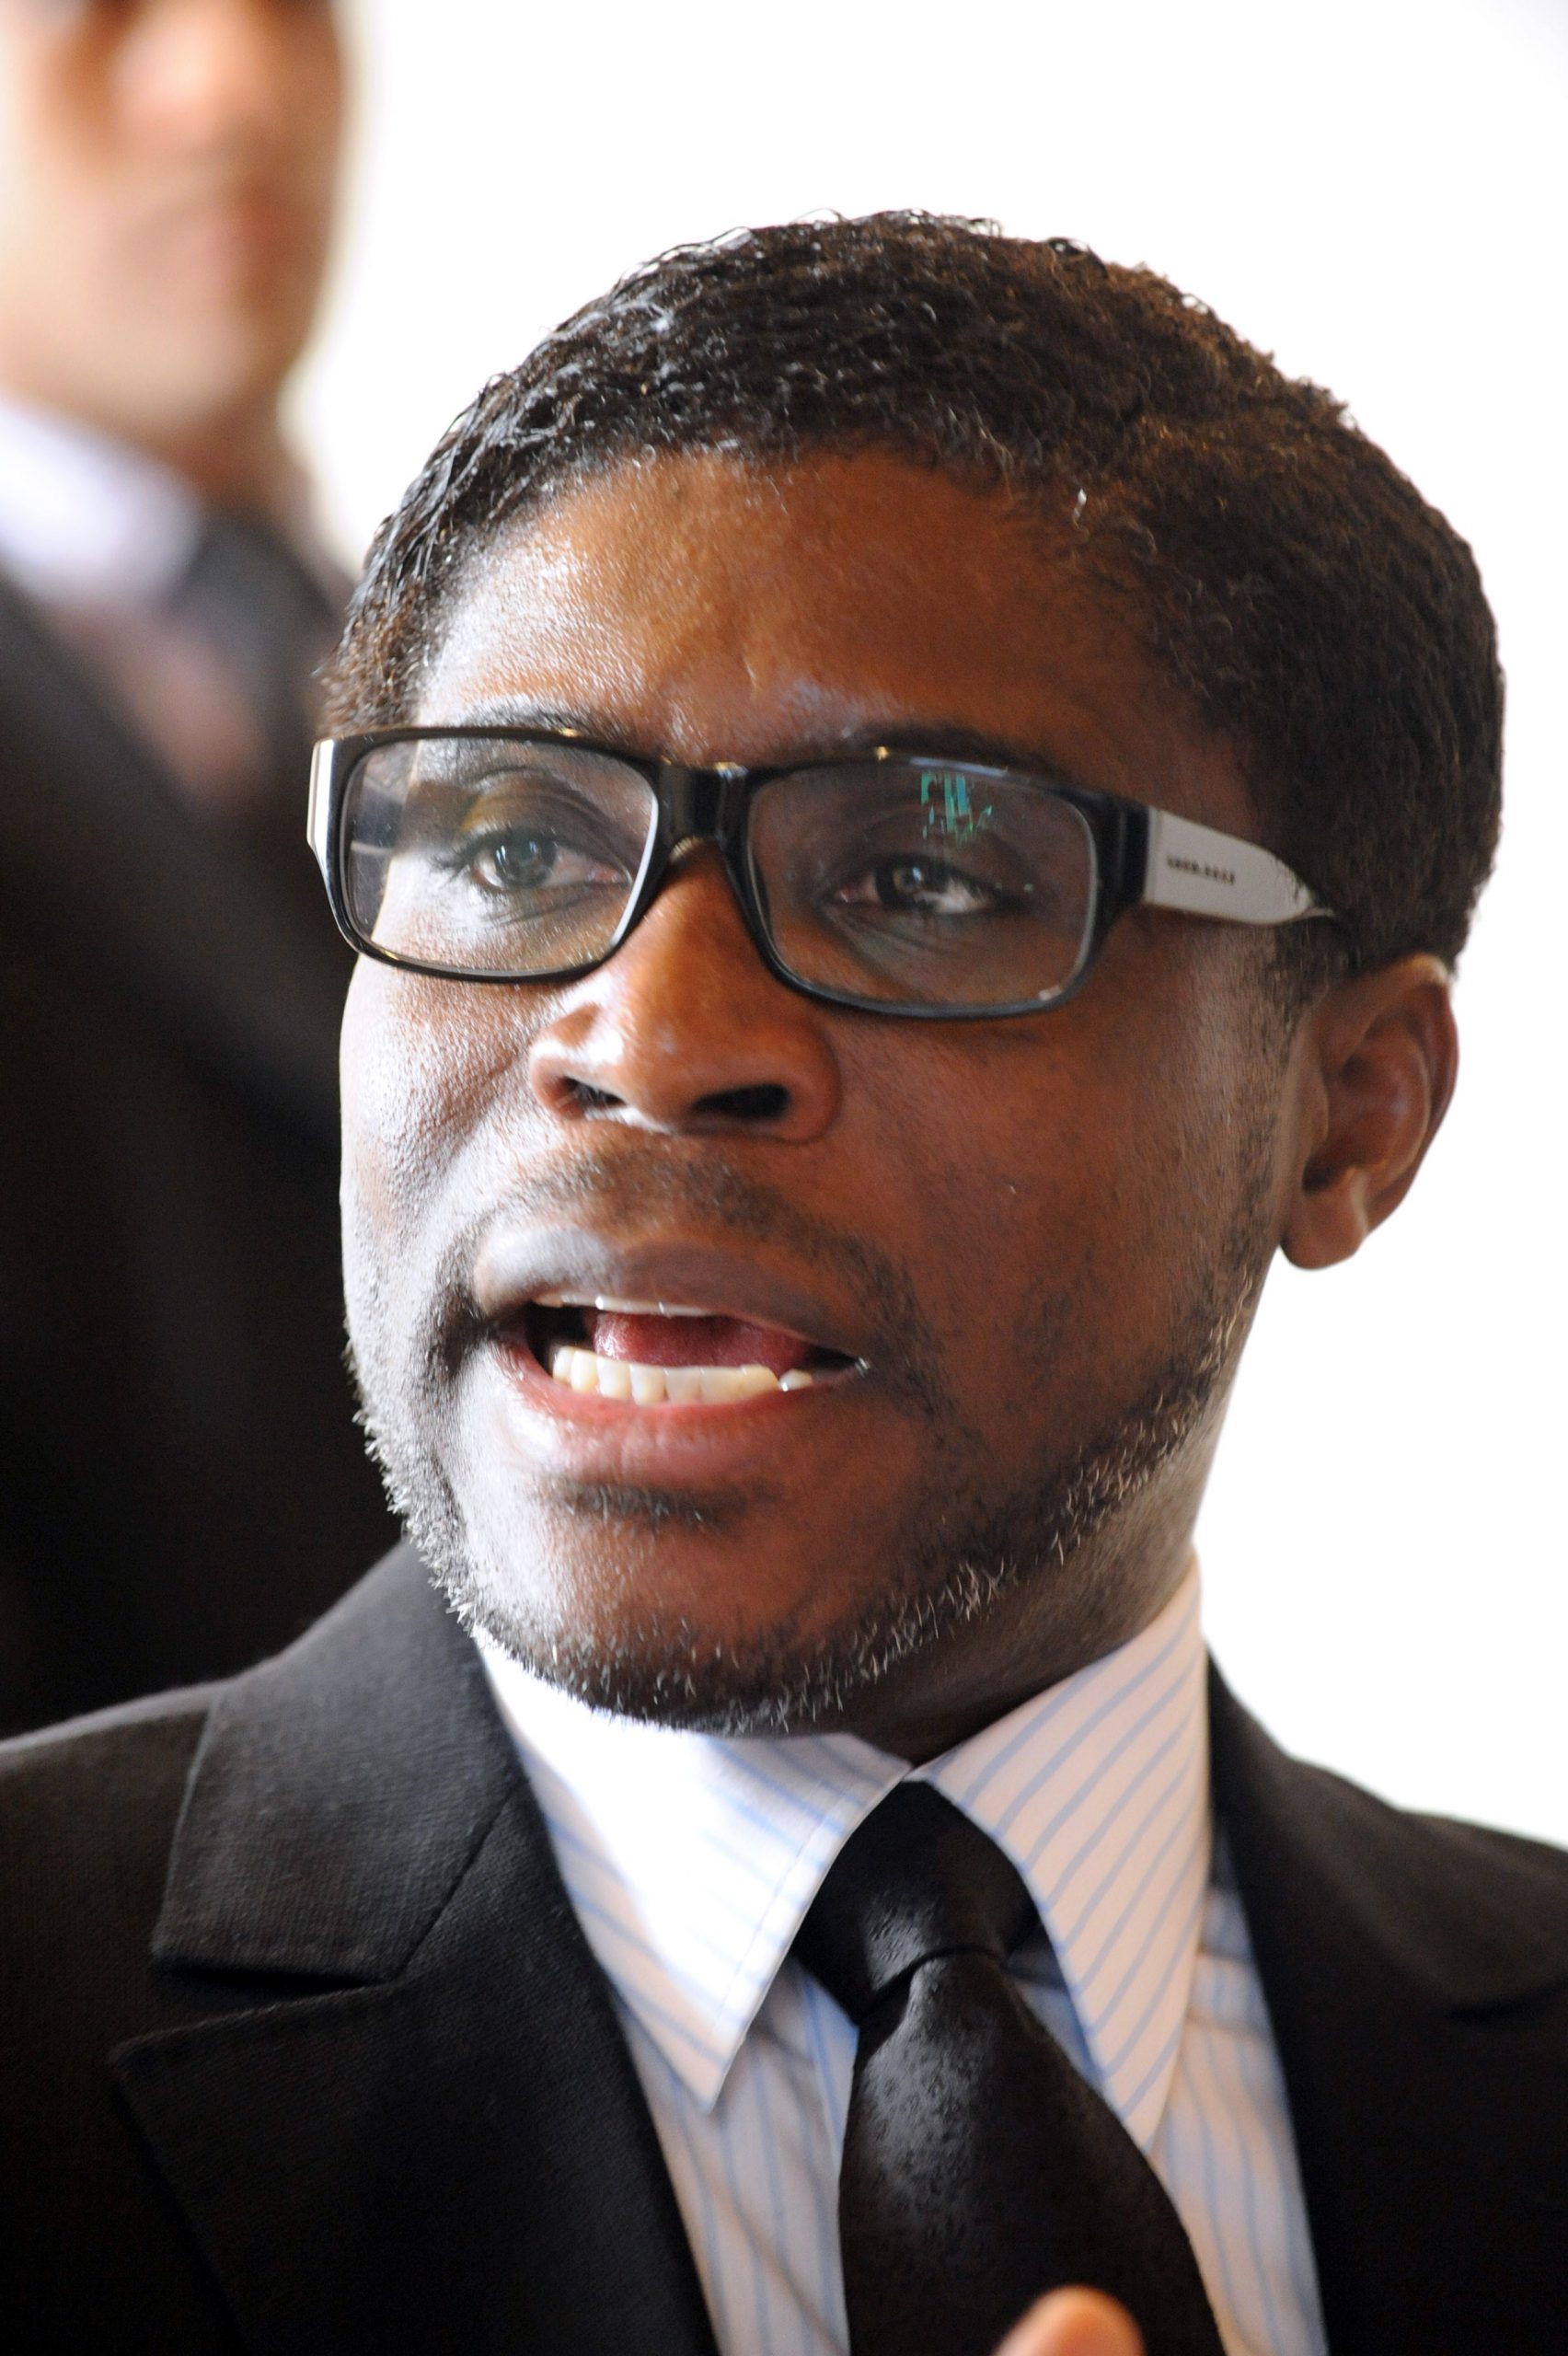 Teodoro Nguema Obiang